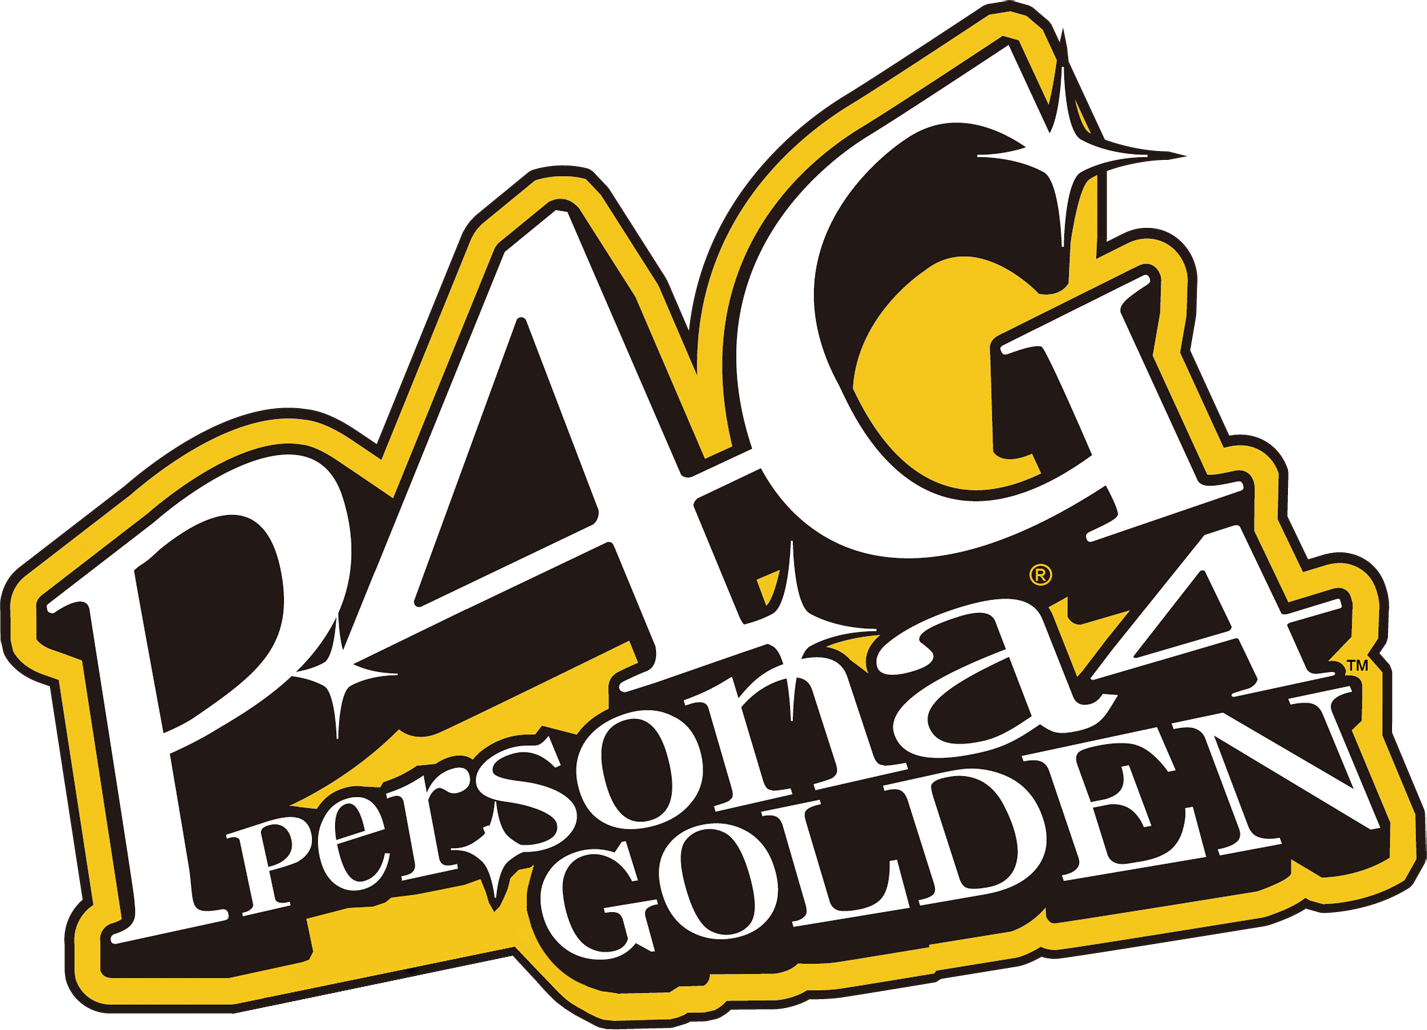 Persona 4 Golden Logo.png